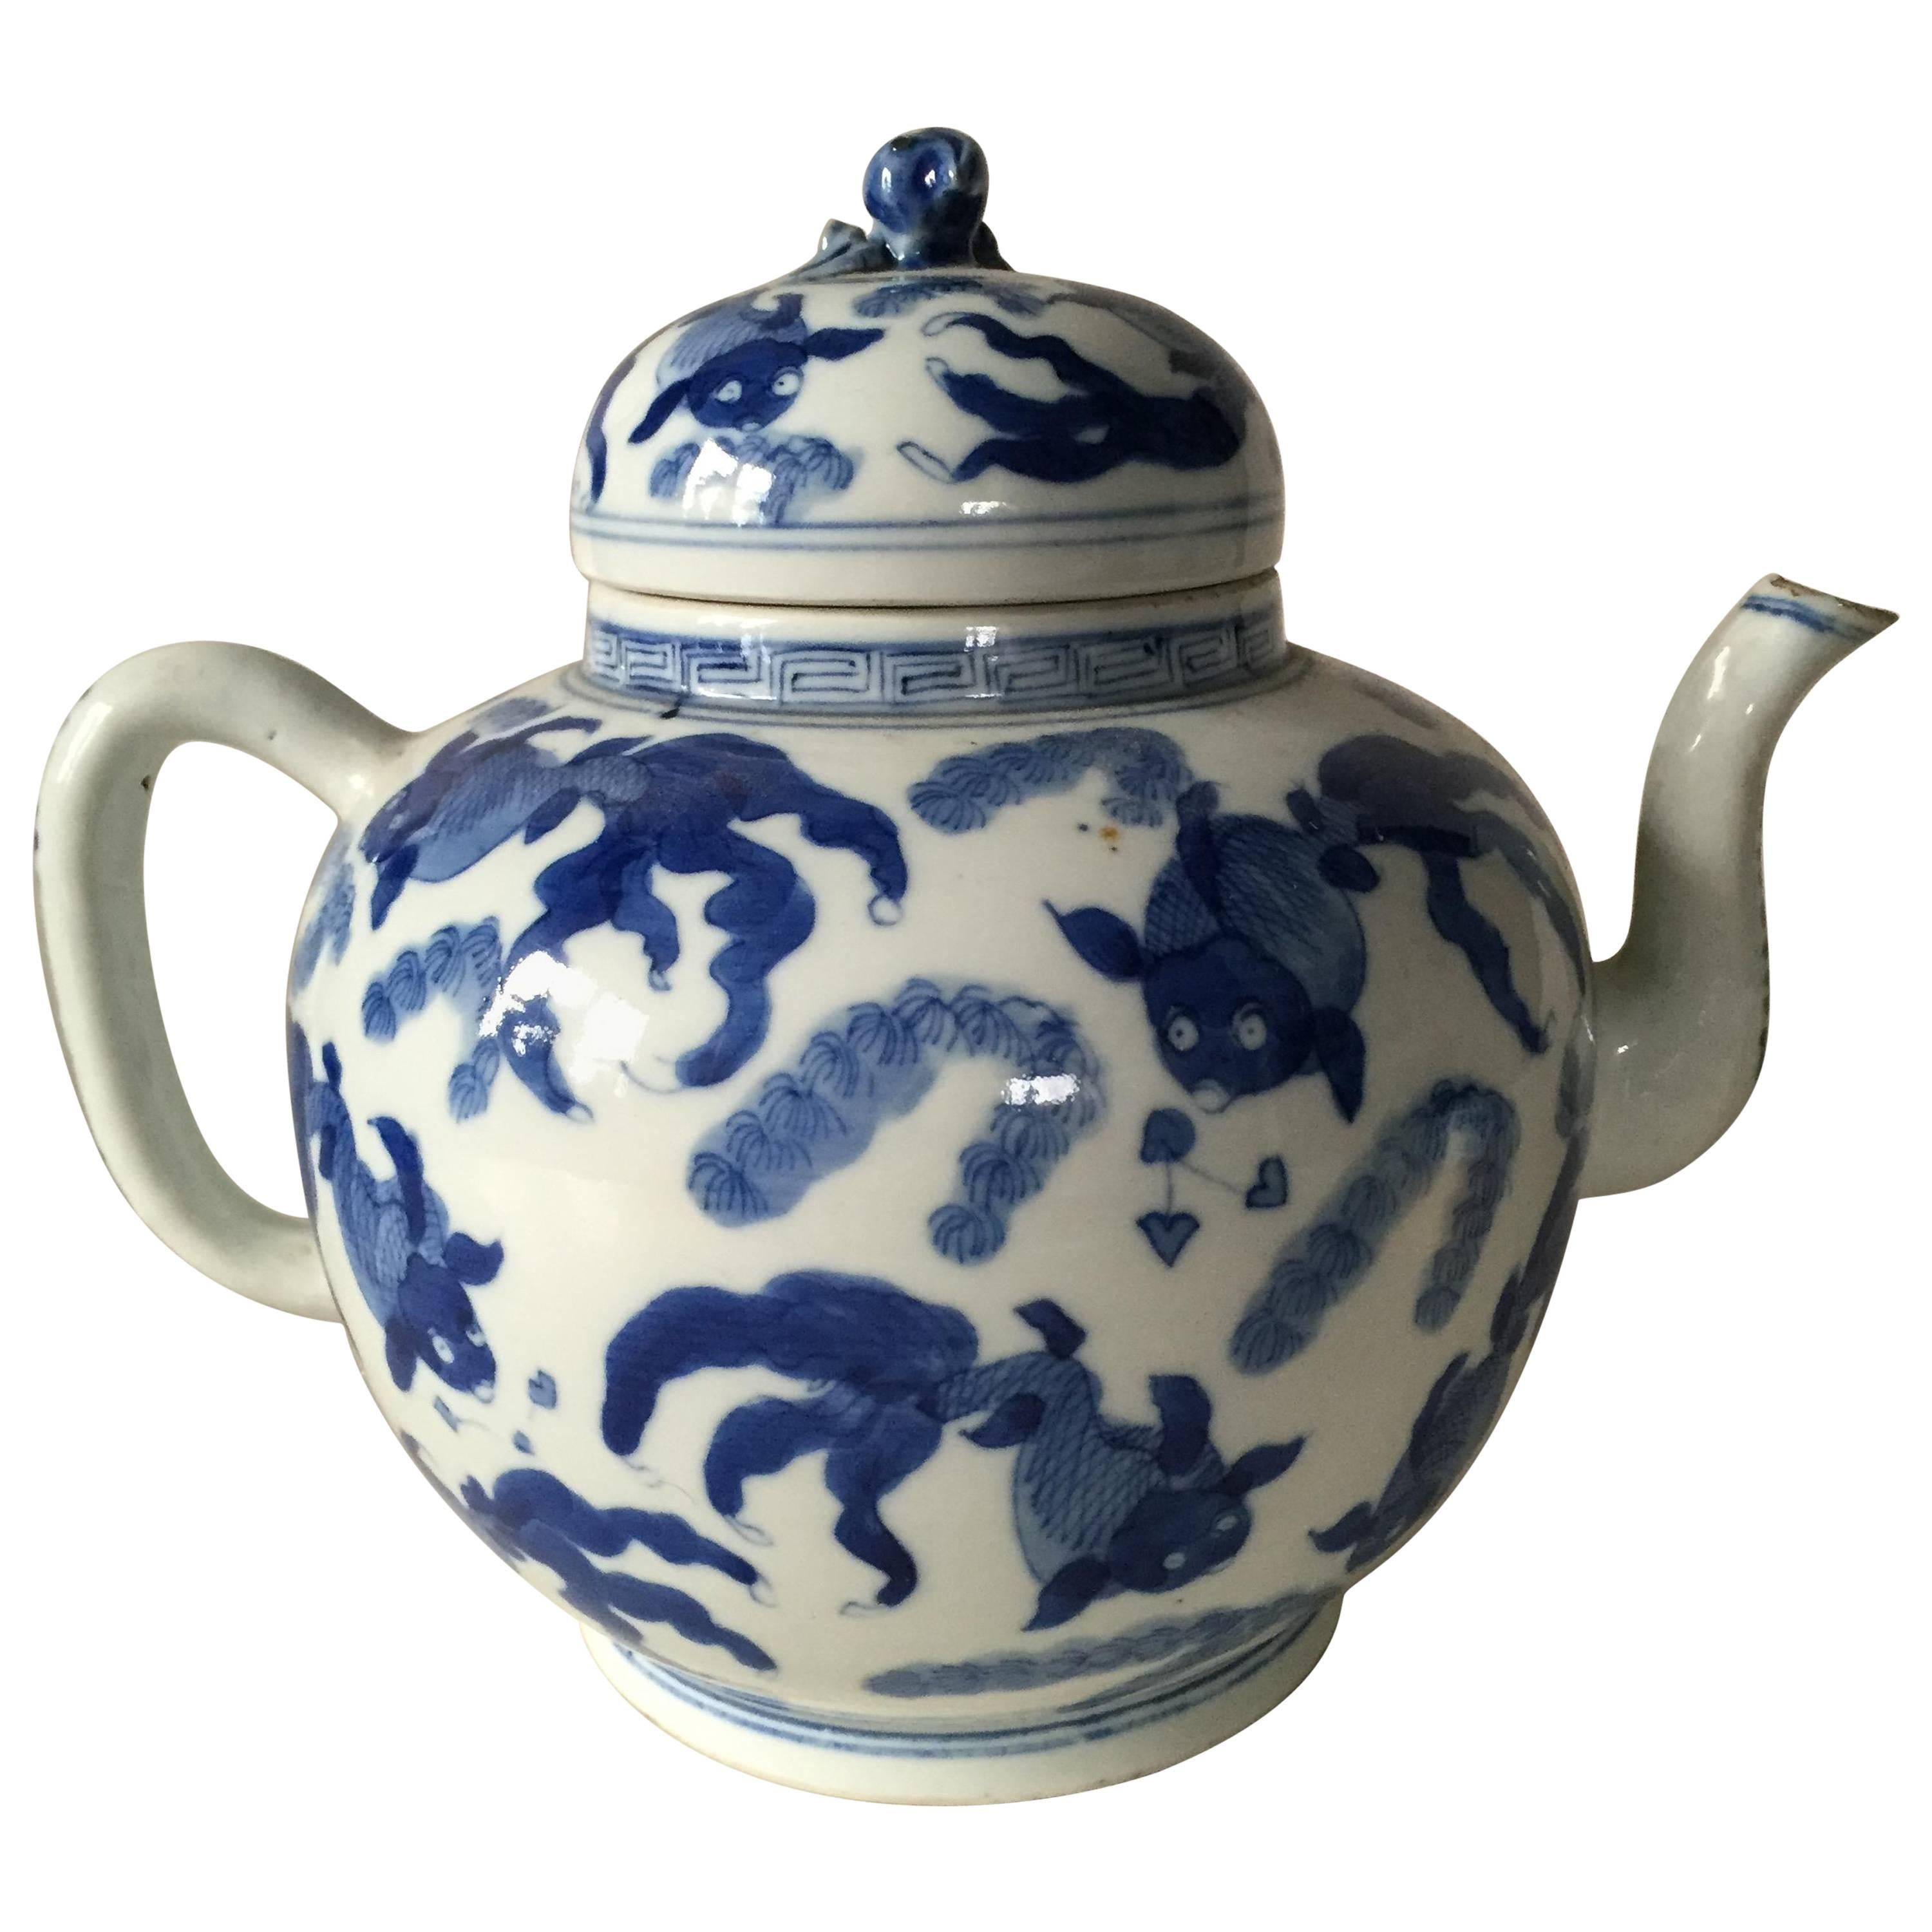 18th Century Chinese Blue and White Porcelain Teapot Kangxi, Yongzheng Reign